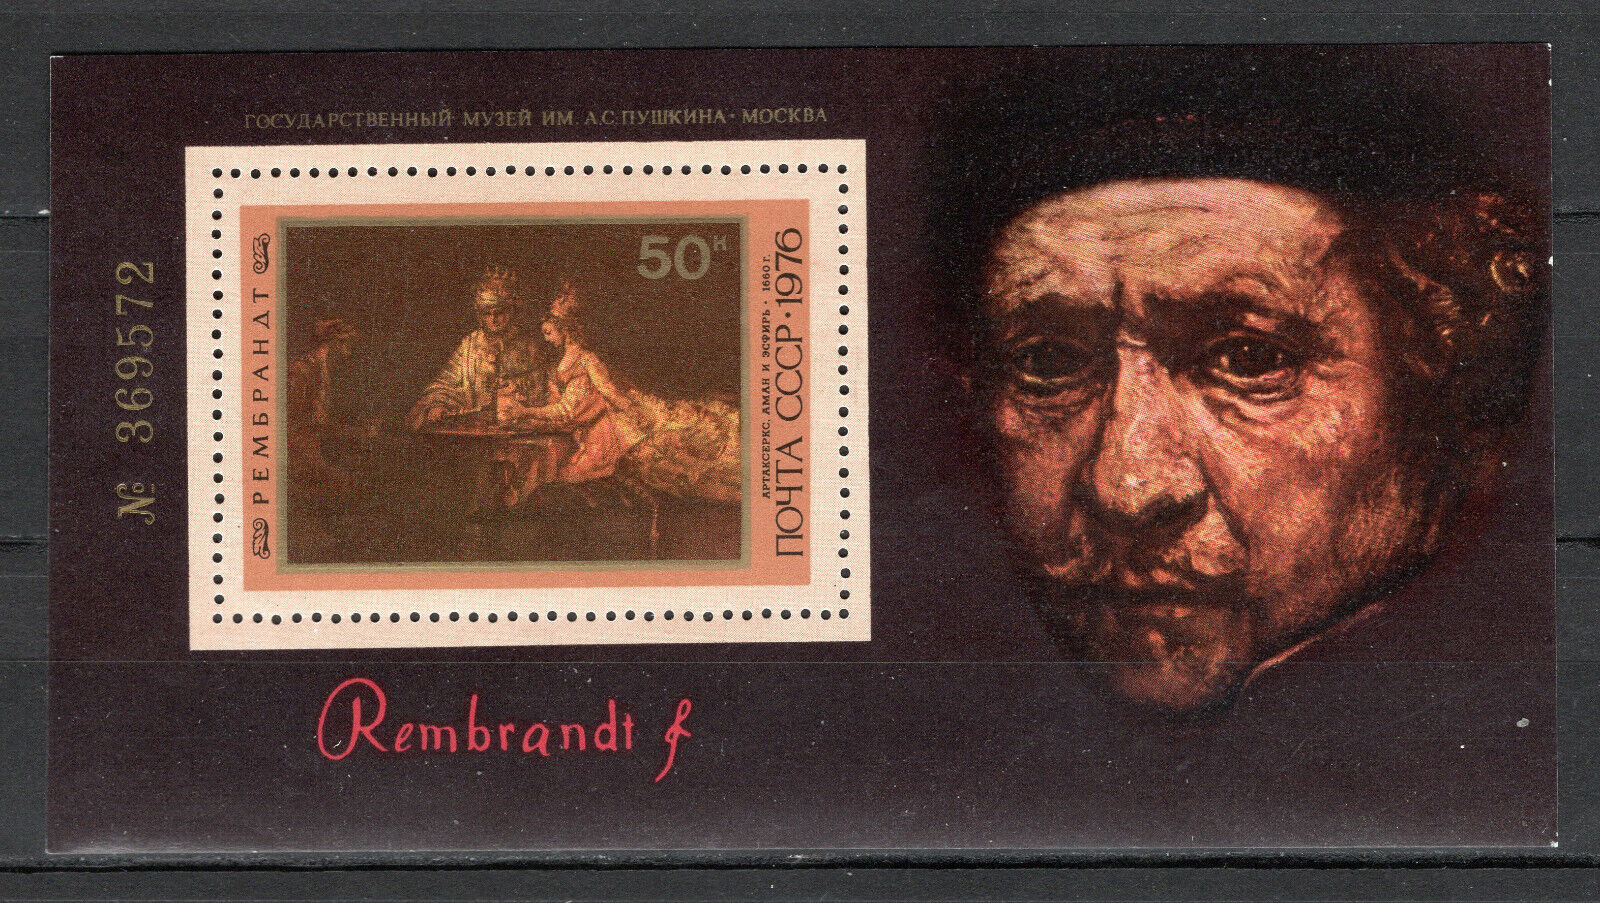 URSS 1976 - pictura Rembrandt, colita neuzata